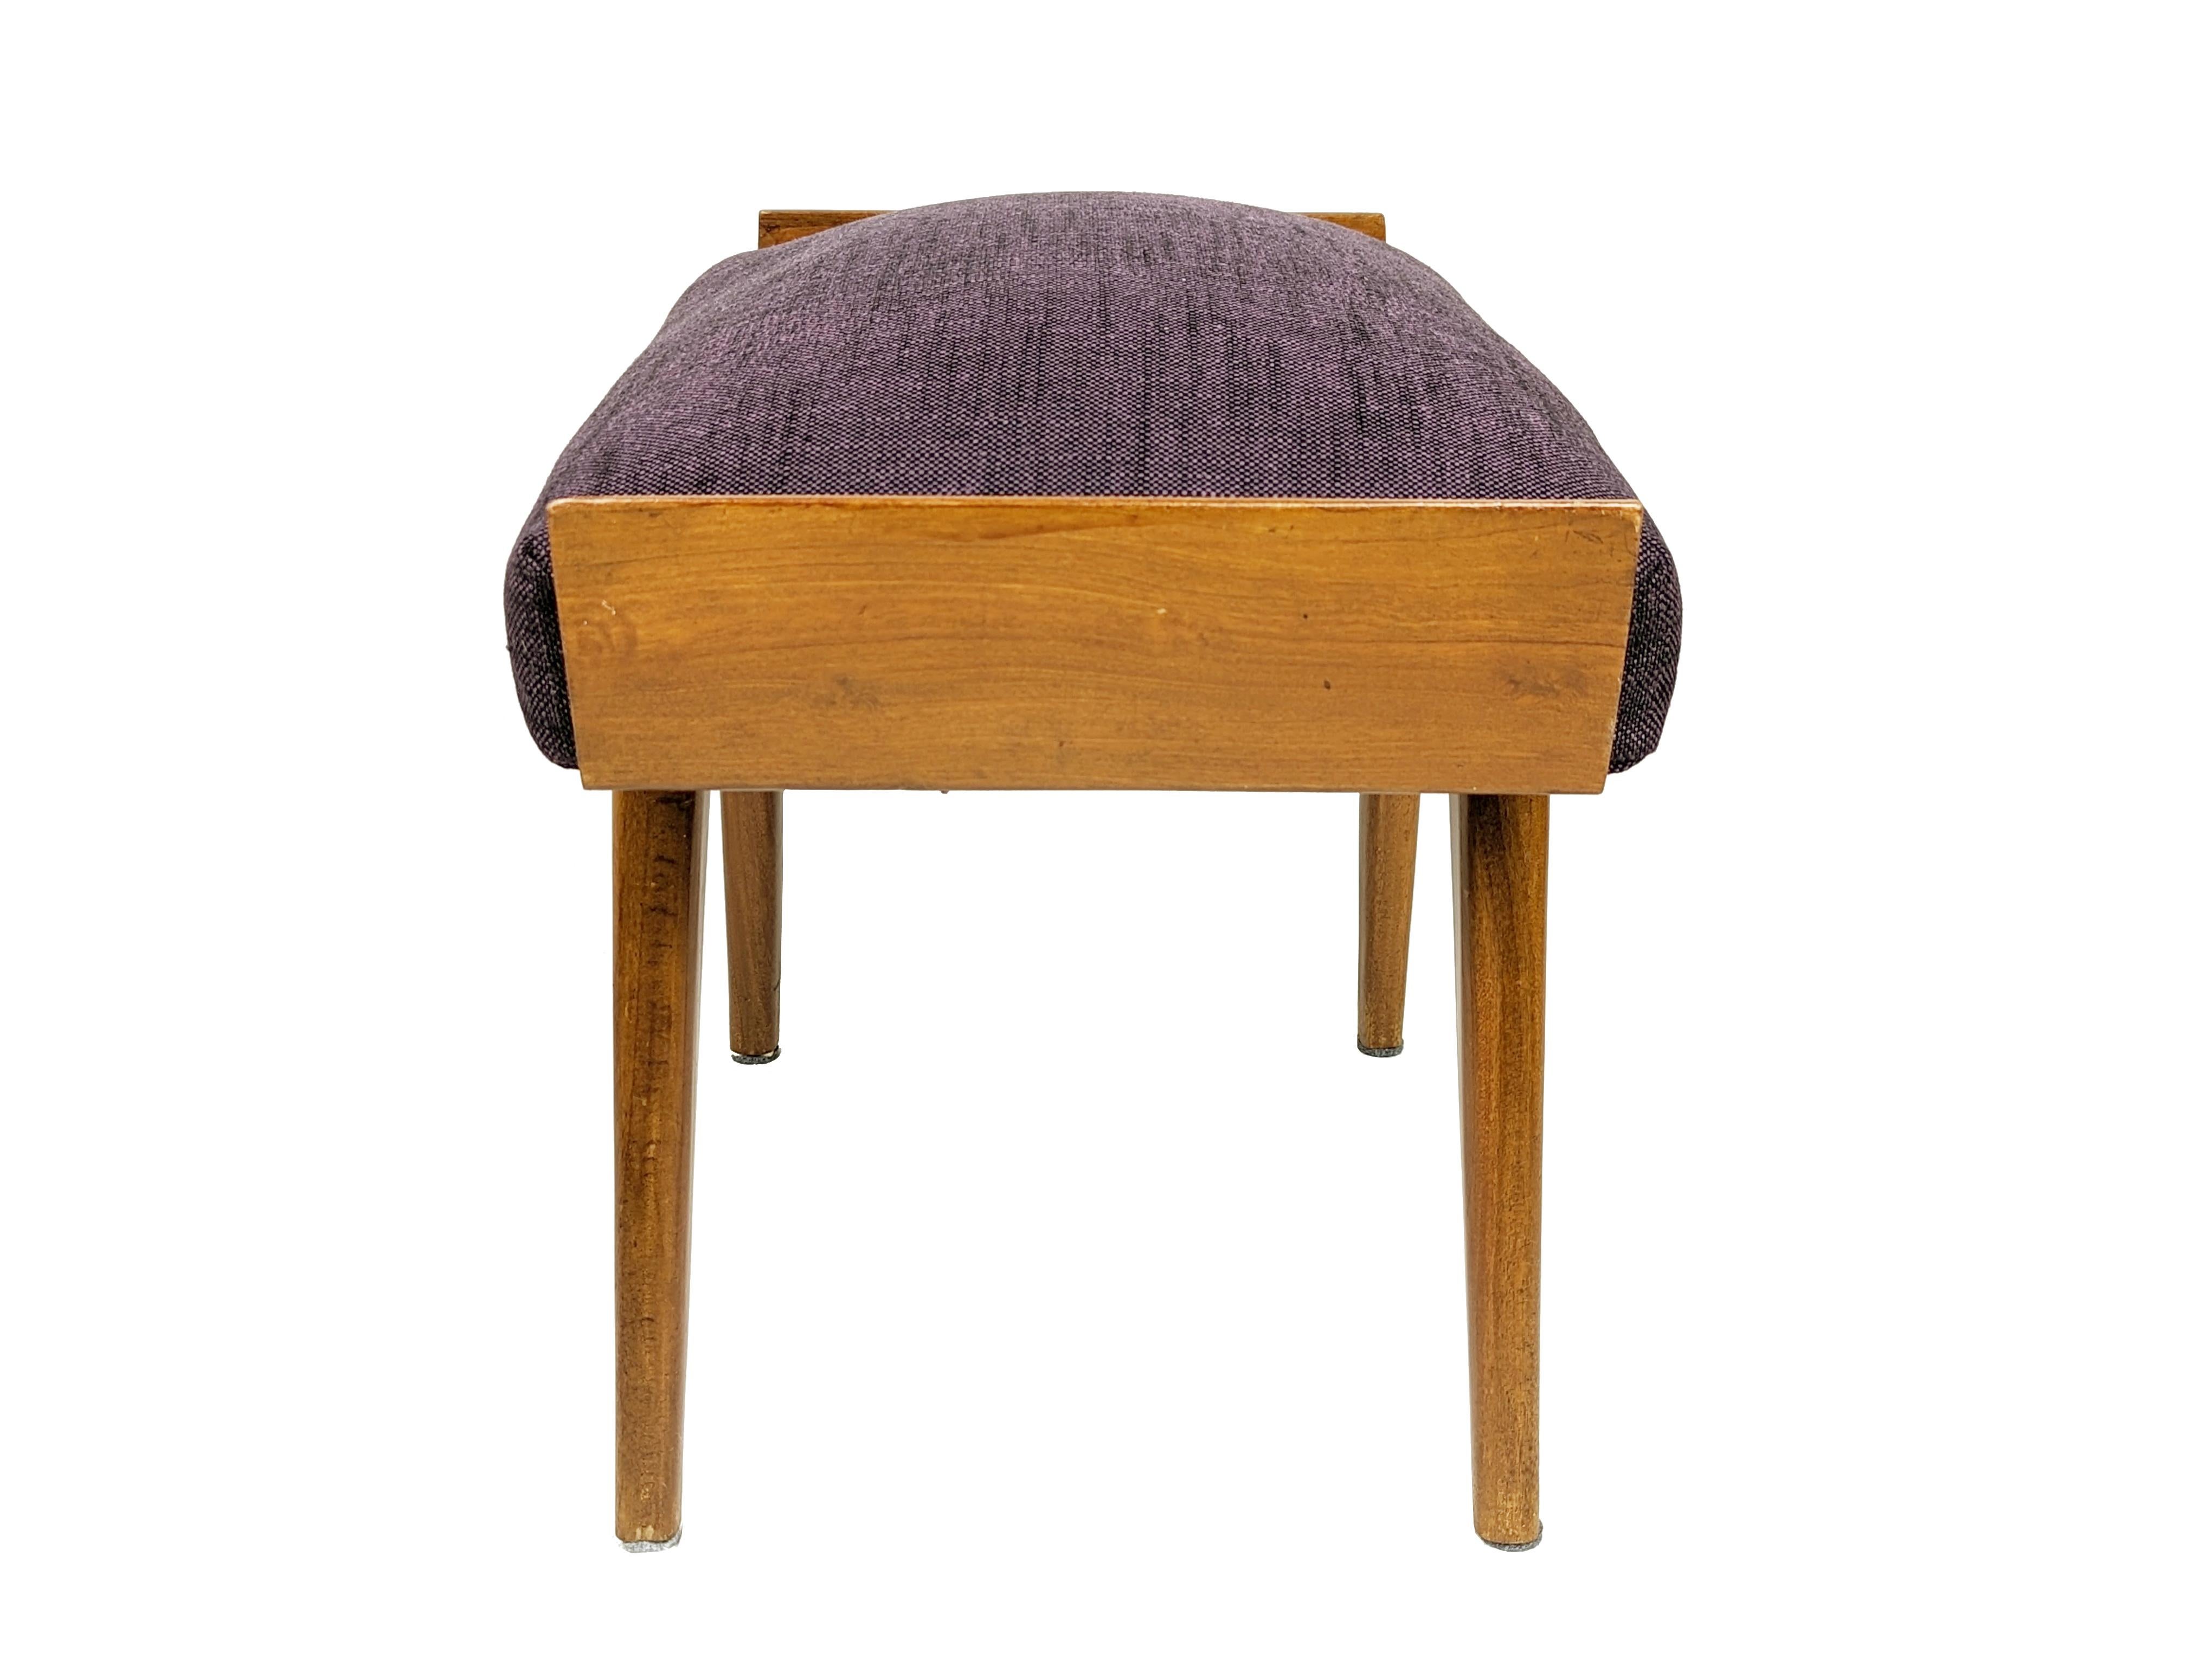 20th Century Mid-Century Italian wood & purple fabric Low Stool or Ottoman For Sale